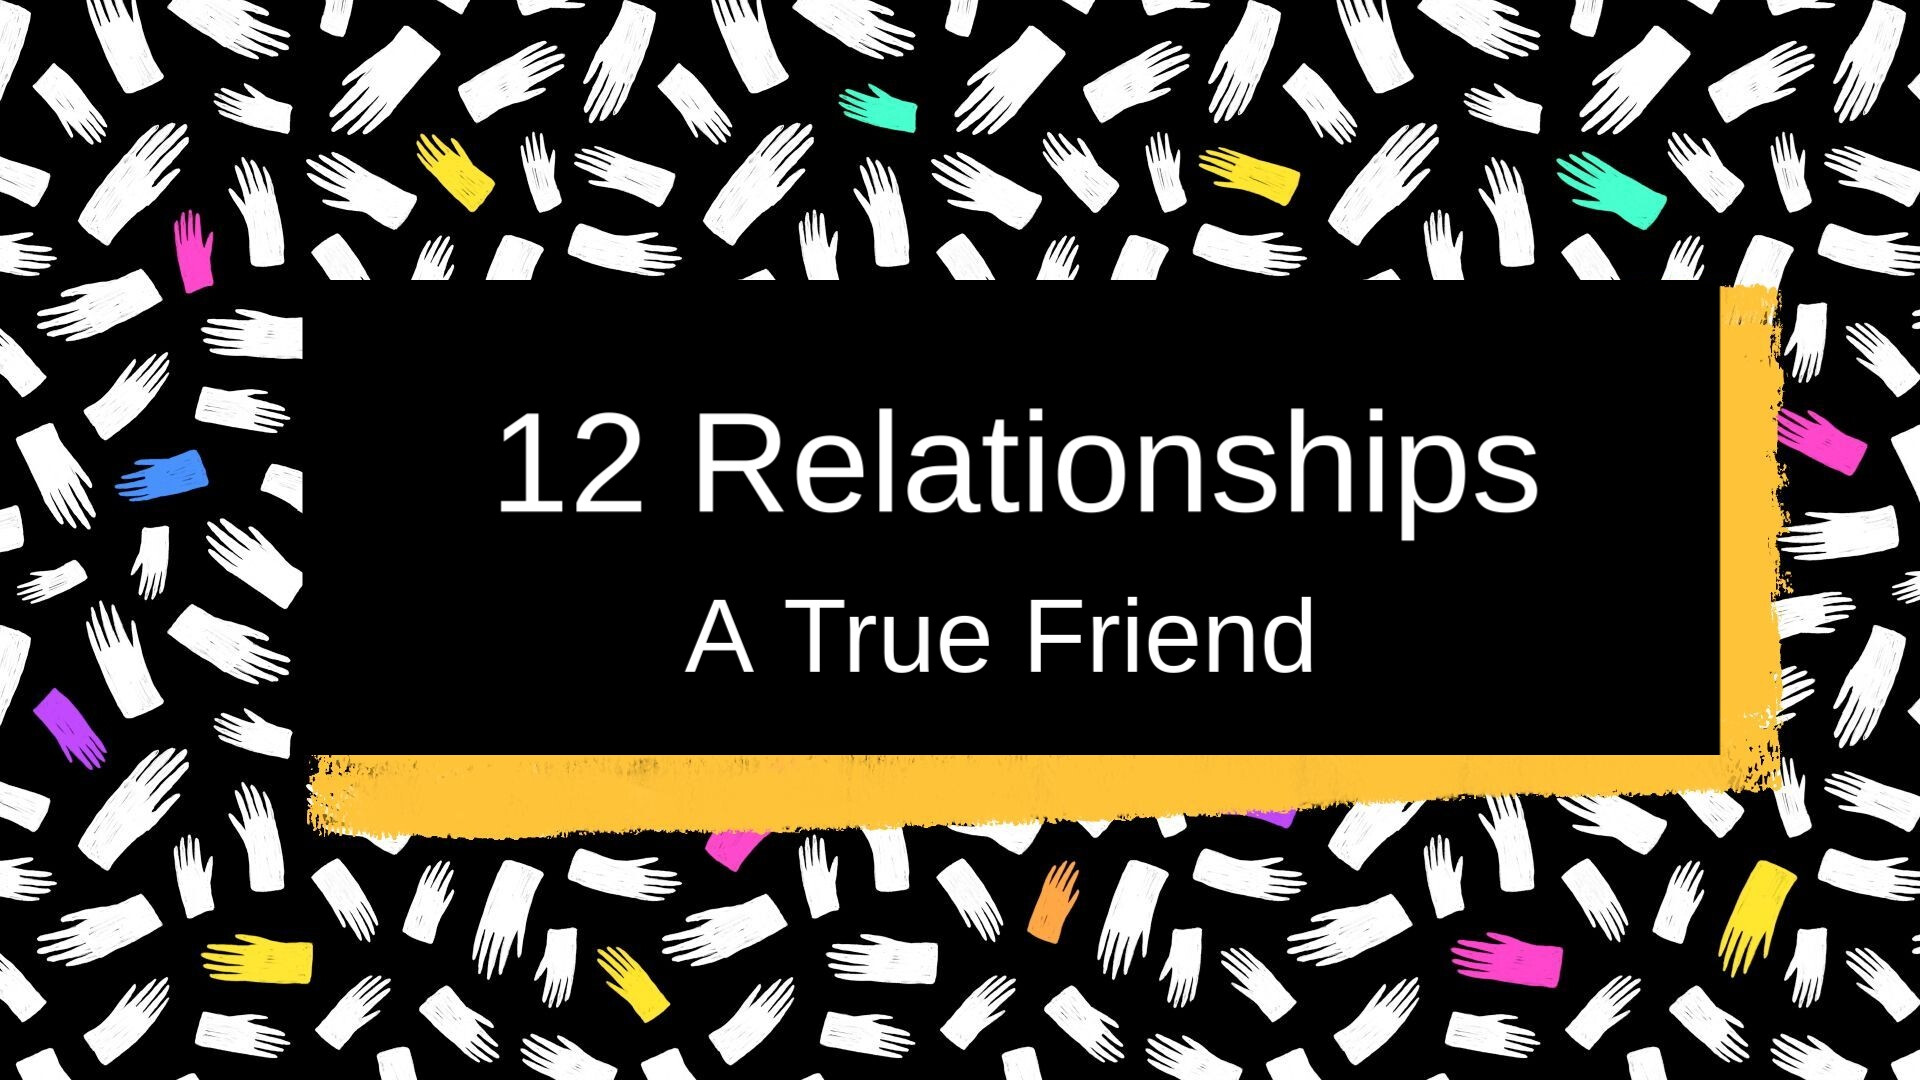 12 Relationships: A True Friend